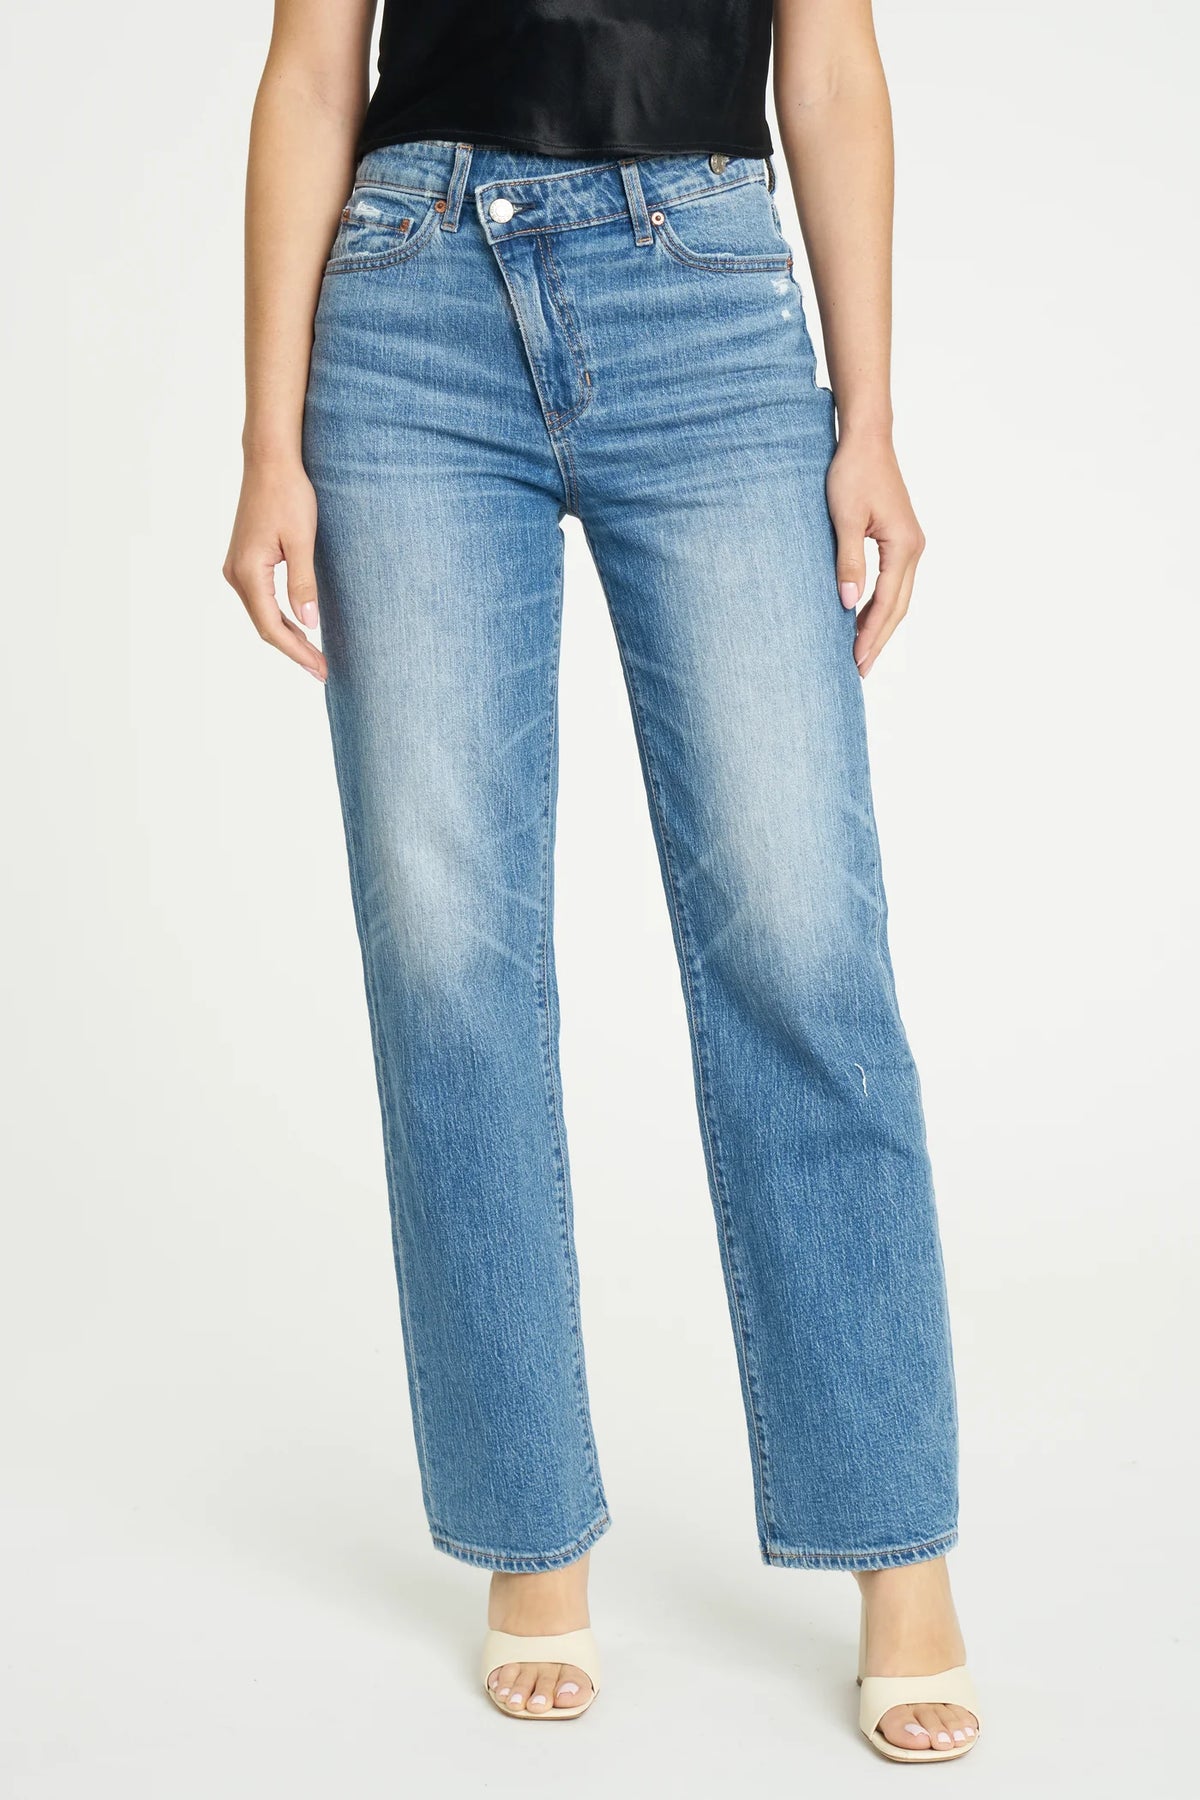 Sundaze Crossover Jeans - Drifter